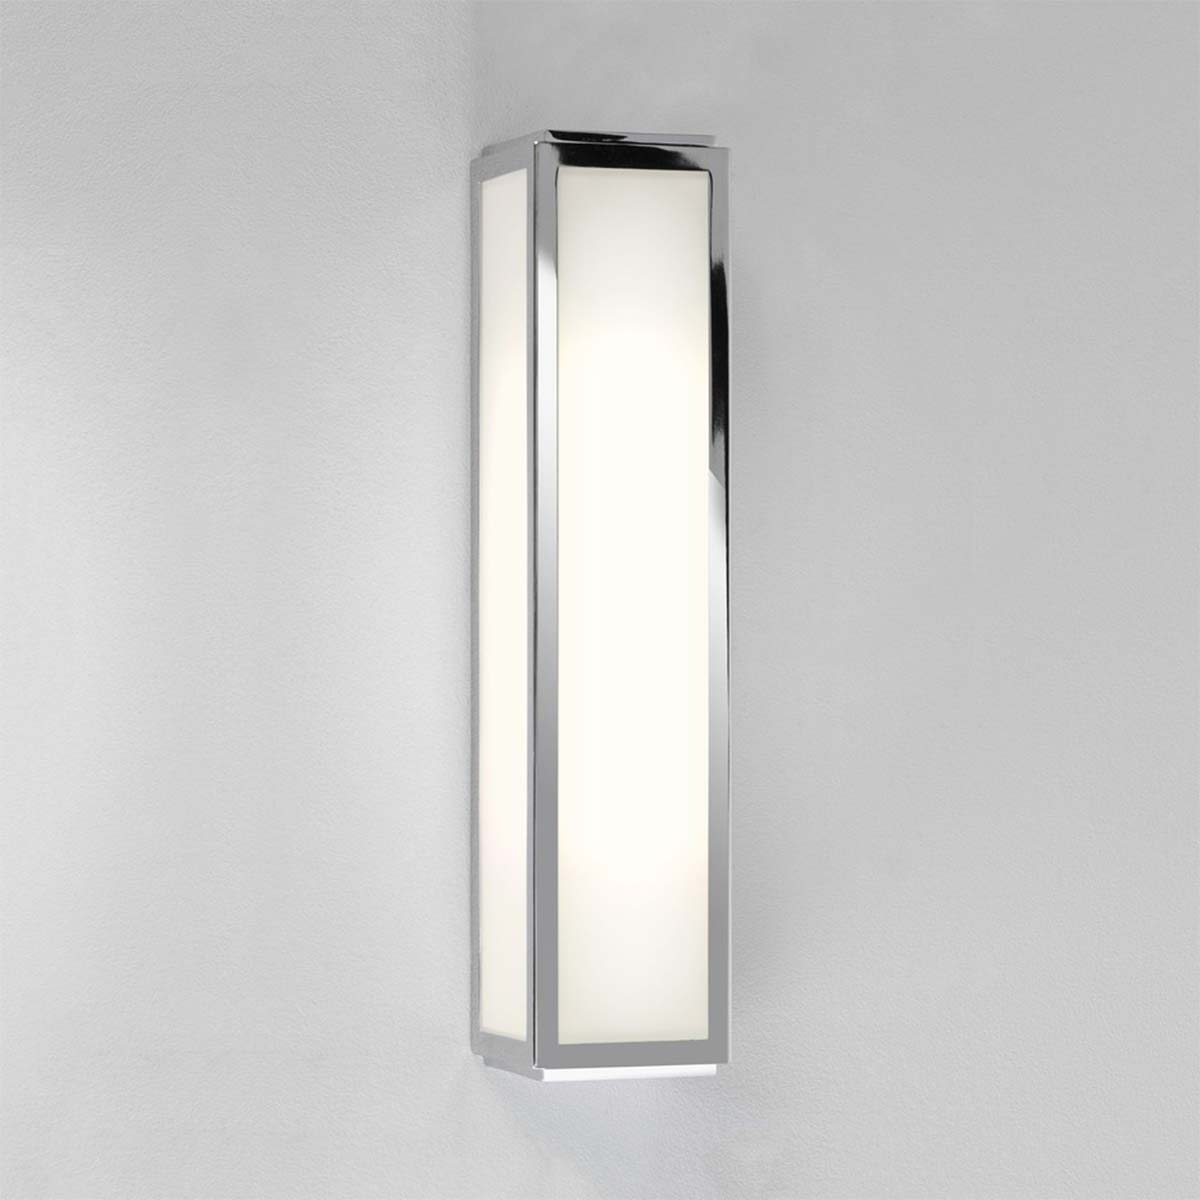 Modena Rectangular Bathroom Light Polished Chrome